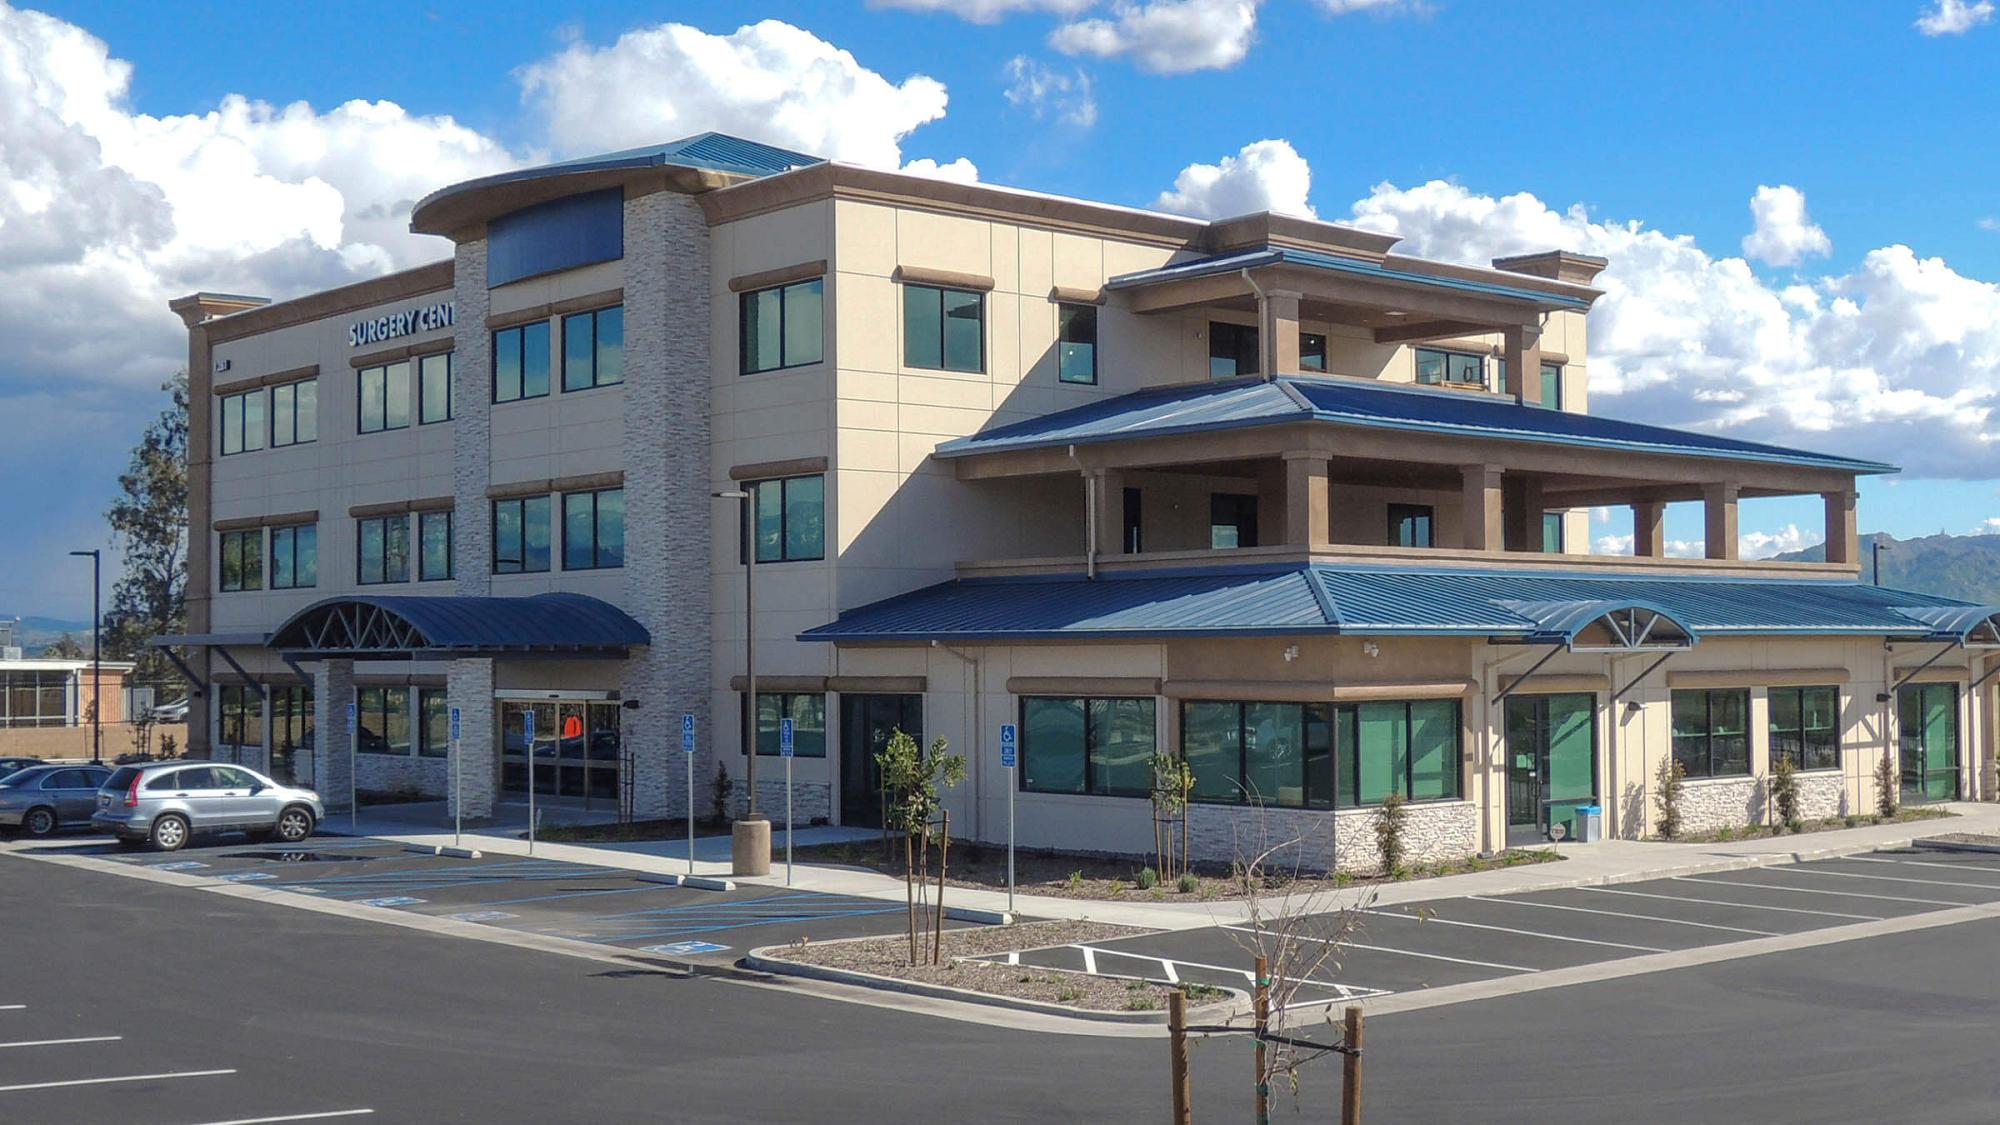 Ophthalmology center in San Bernardino